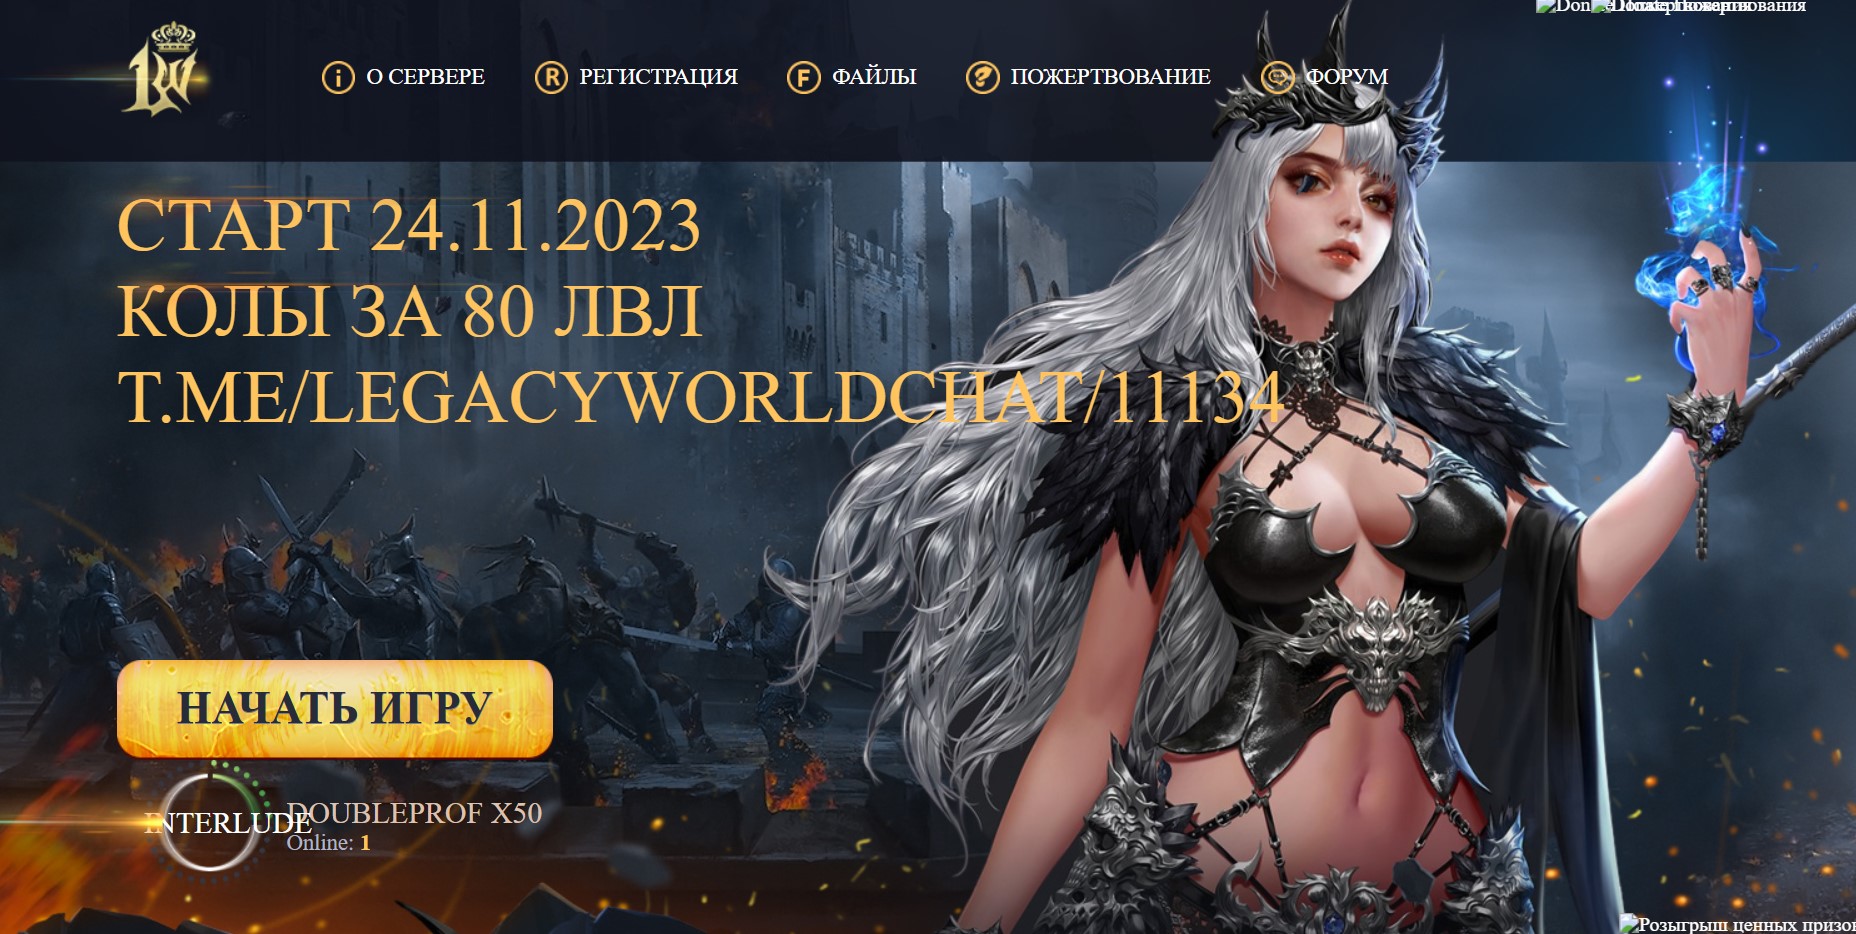 🏰🚀 LegacyWorld - Return to the Interlude Era with x50 Rates!